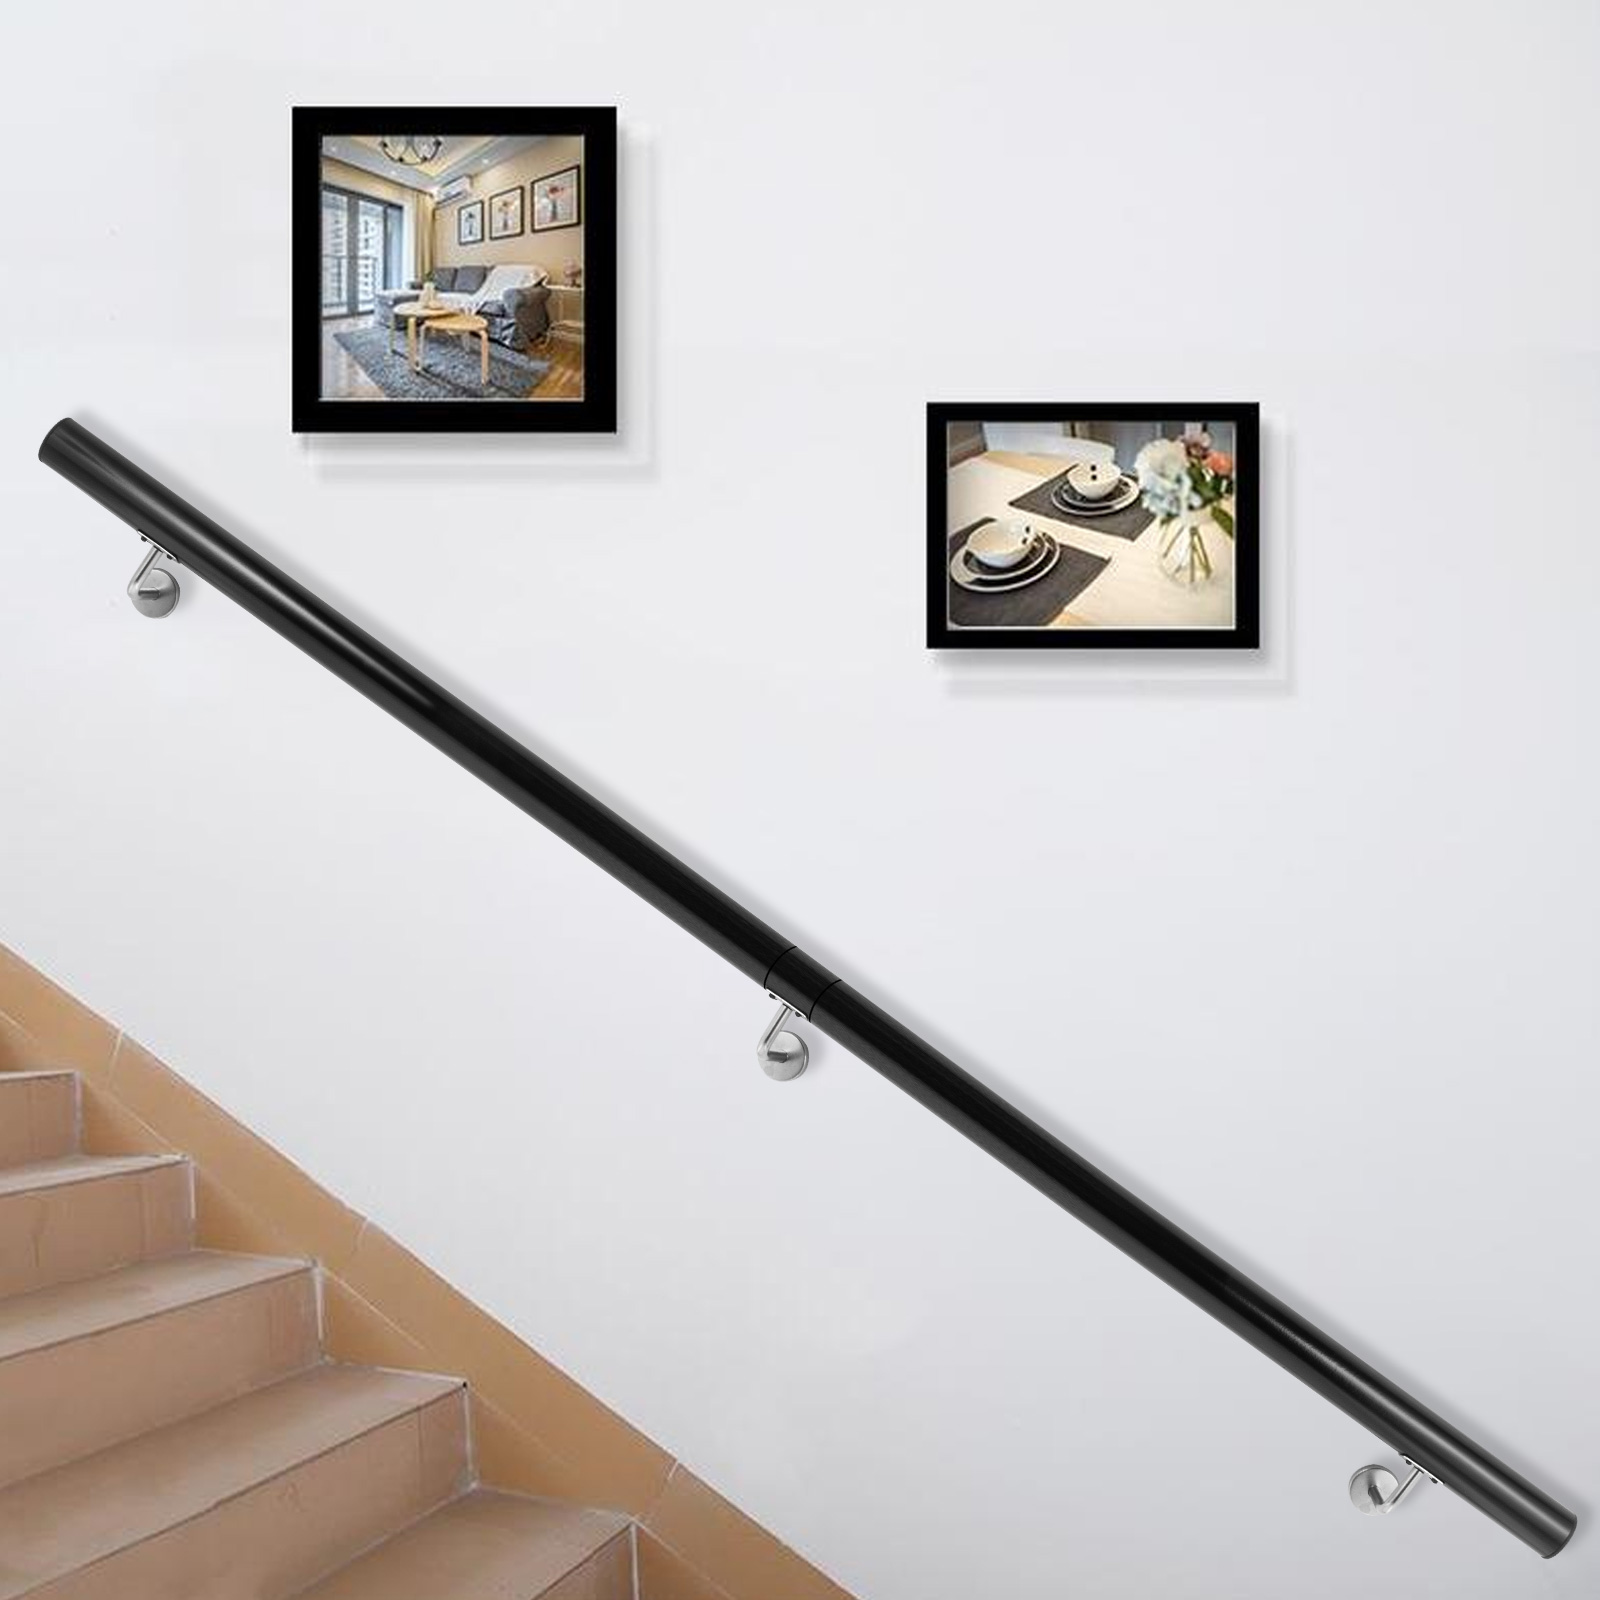 Stair Handrail Stair Rail Aluminum Modern Handrail For Stairs 5ft Length Black от Vevor Many GEOs